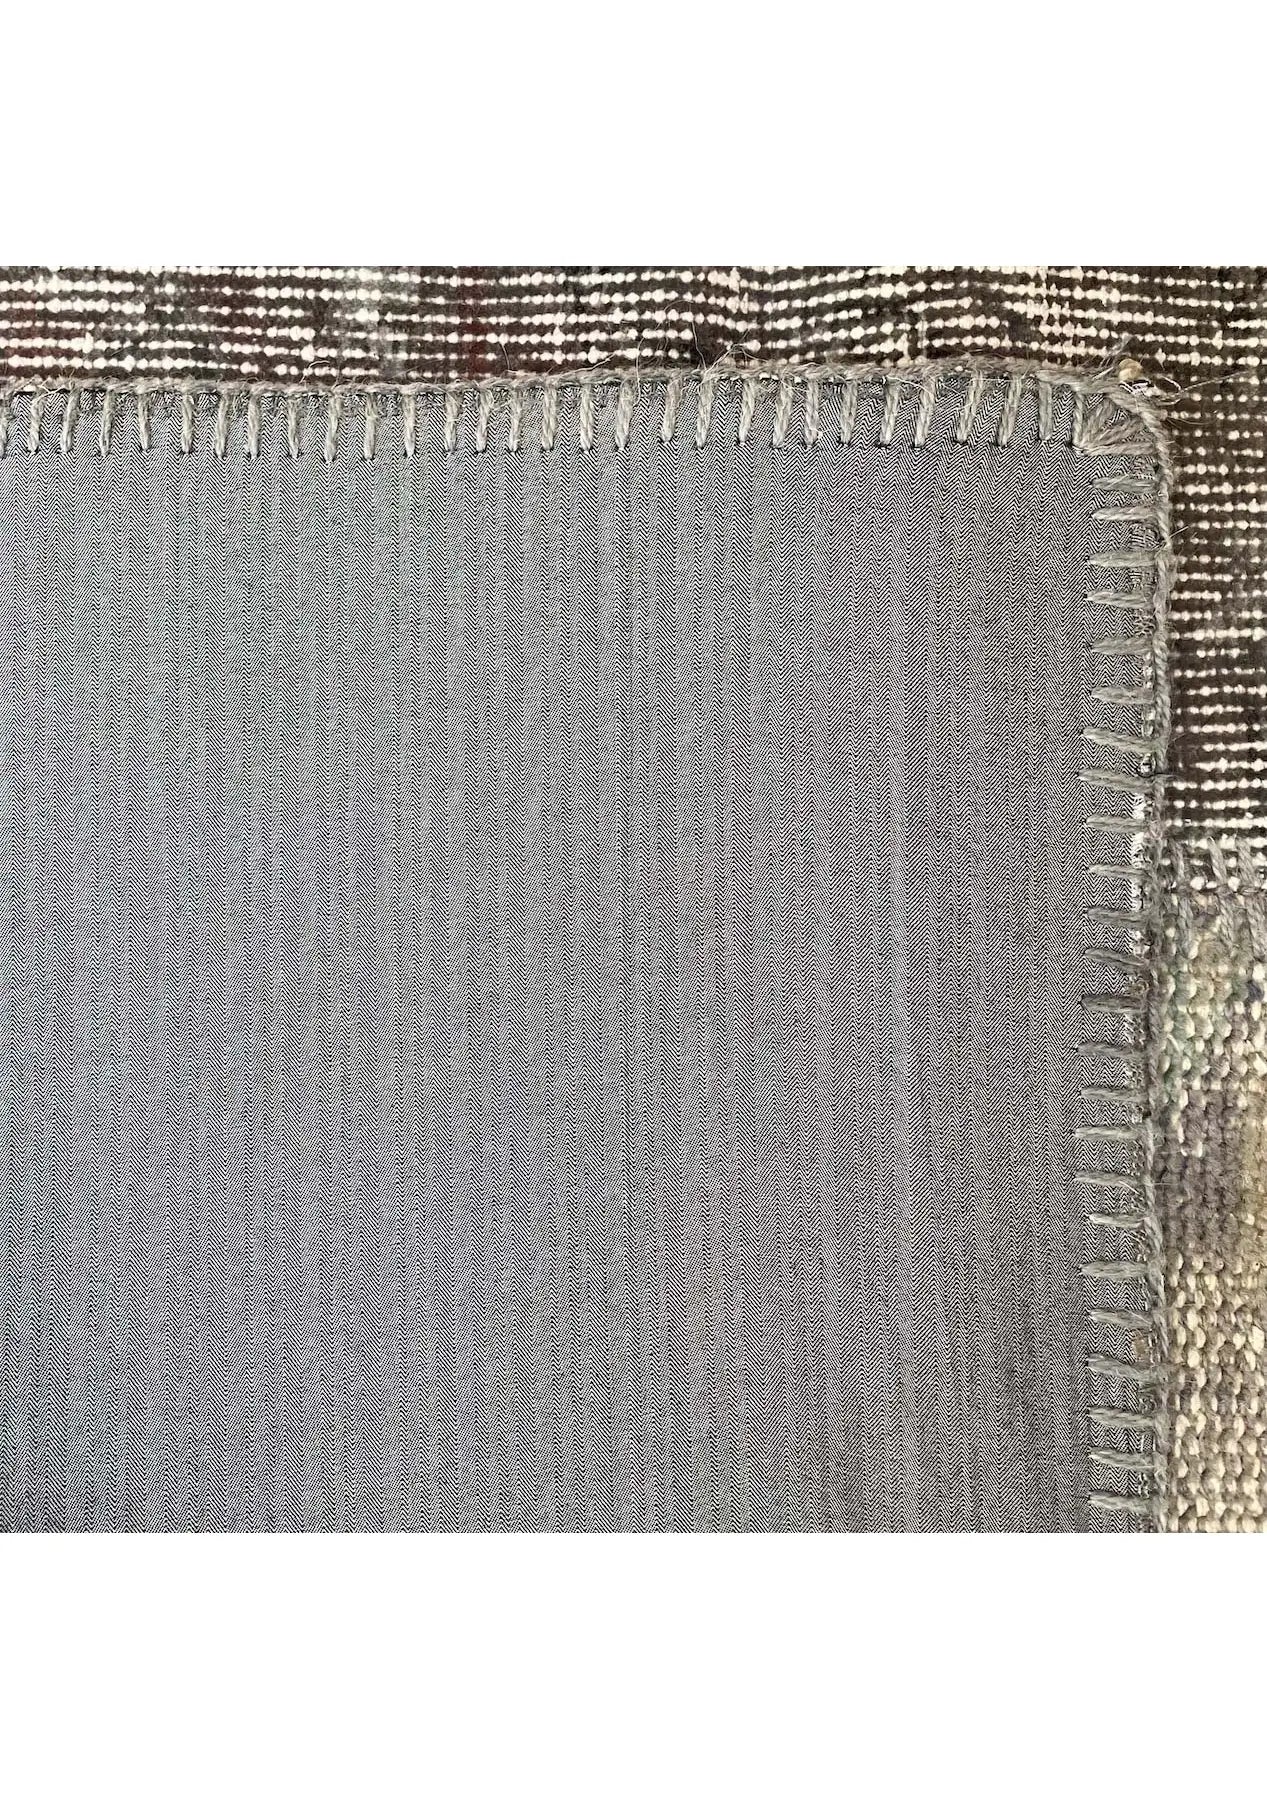 Torree - Vintage Gray Patchwork Rug - kudenrugs